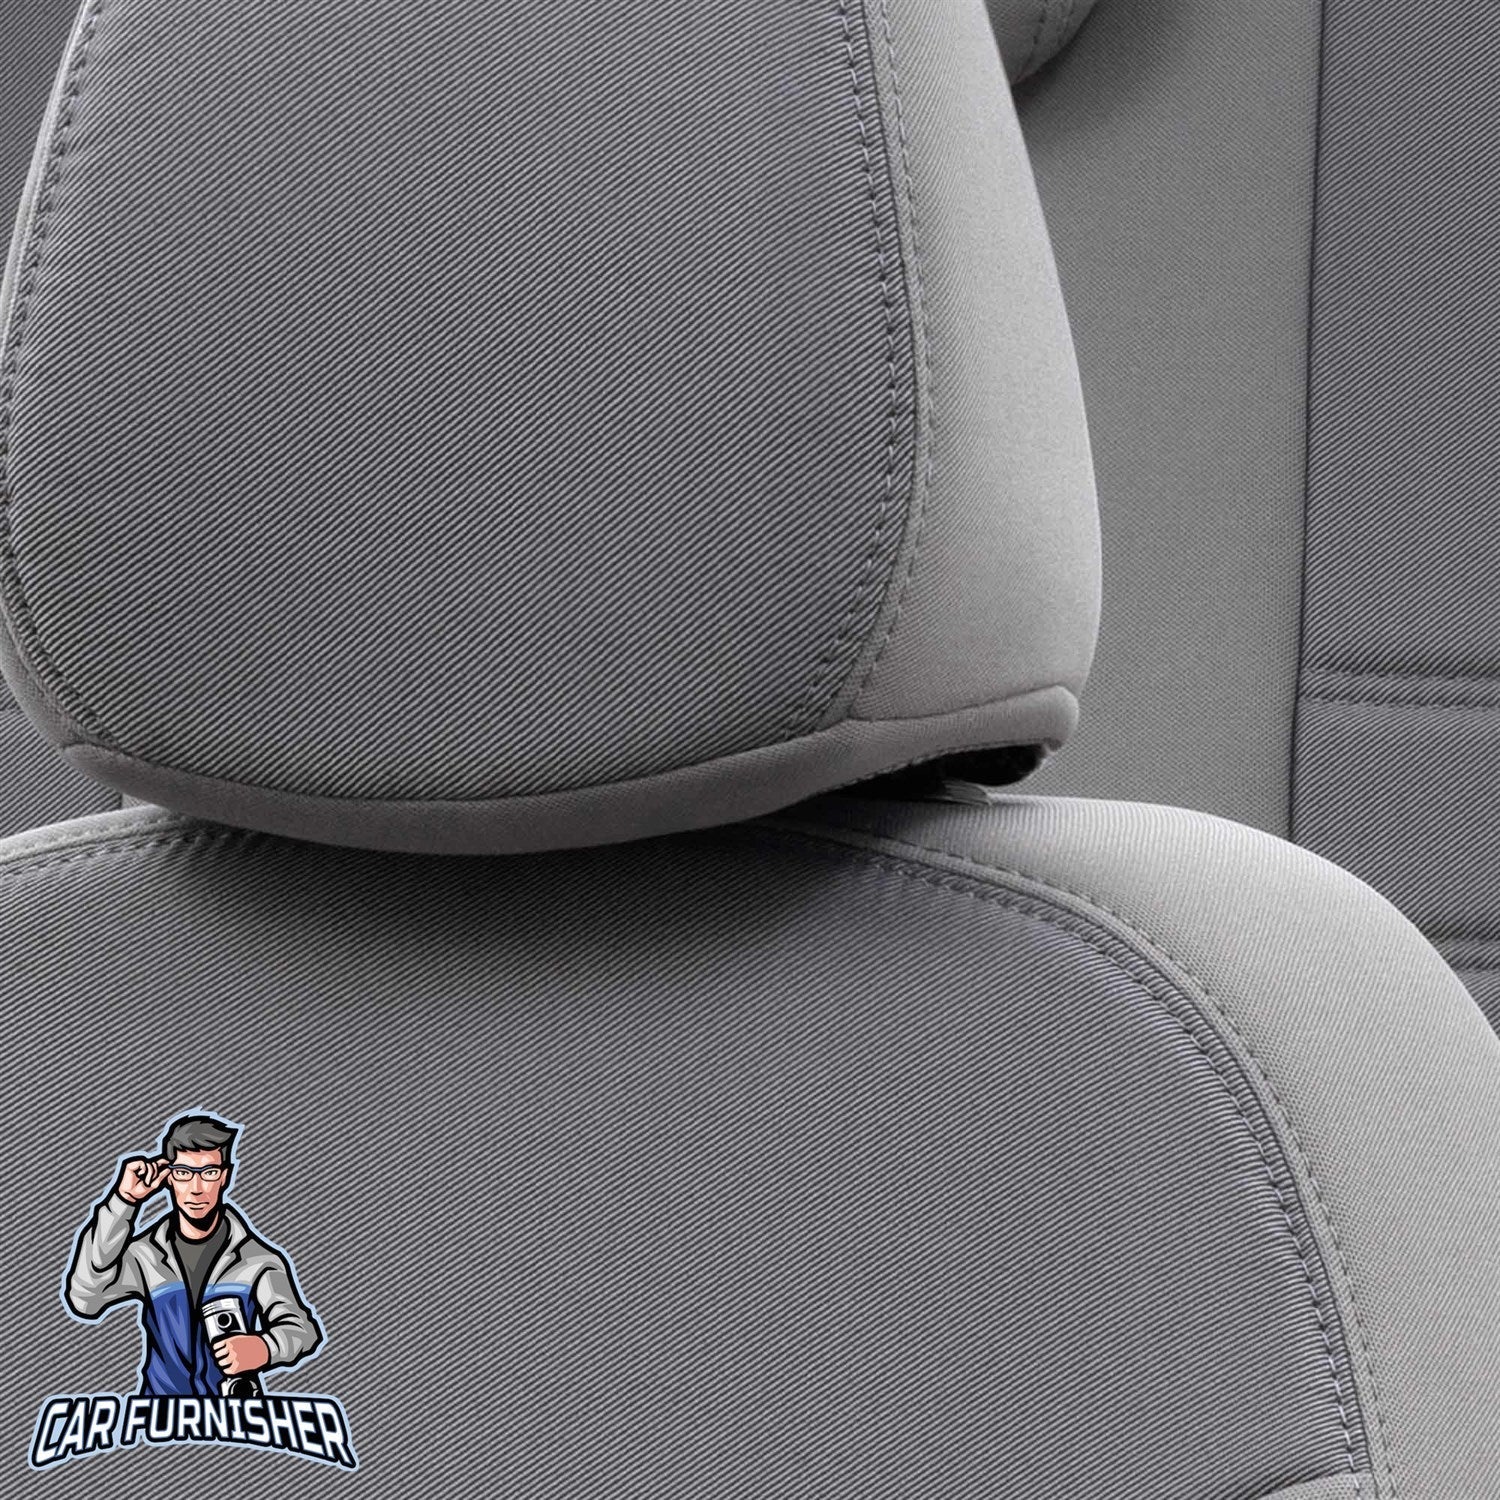 Porsche Cayenne Seat Covers Original Jacquard Design Gray Jacquard Fabric